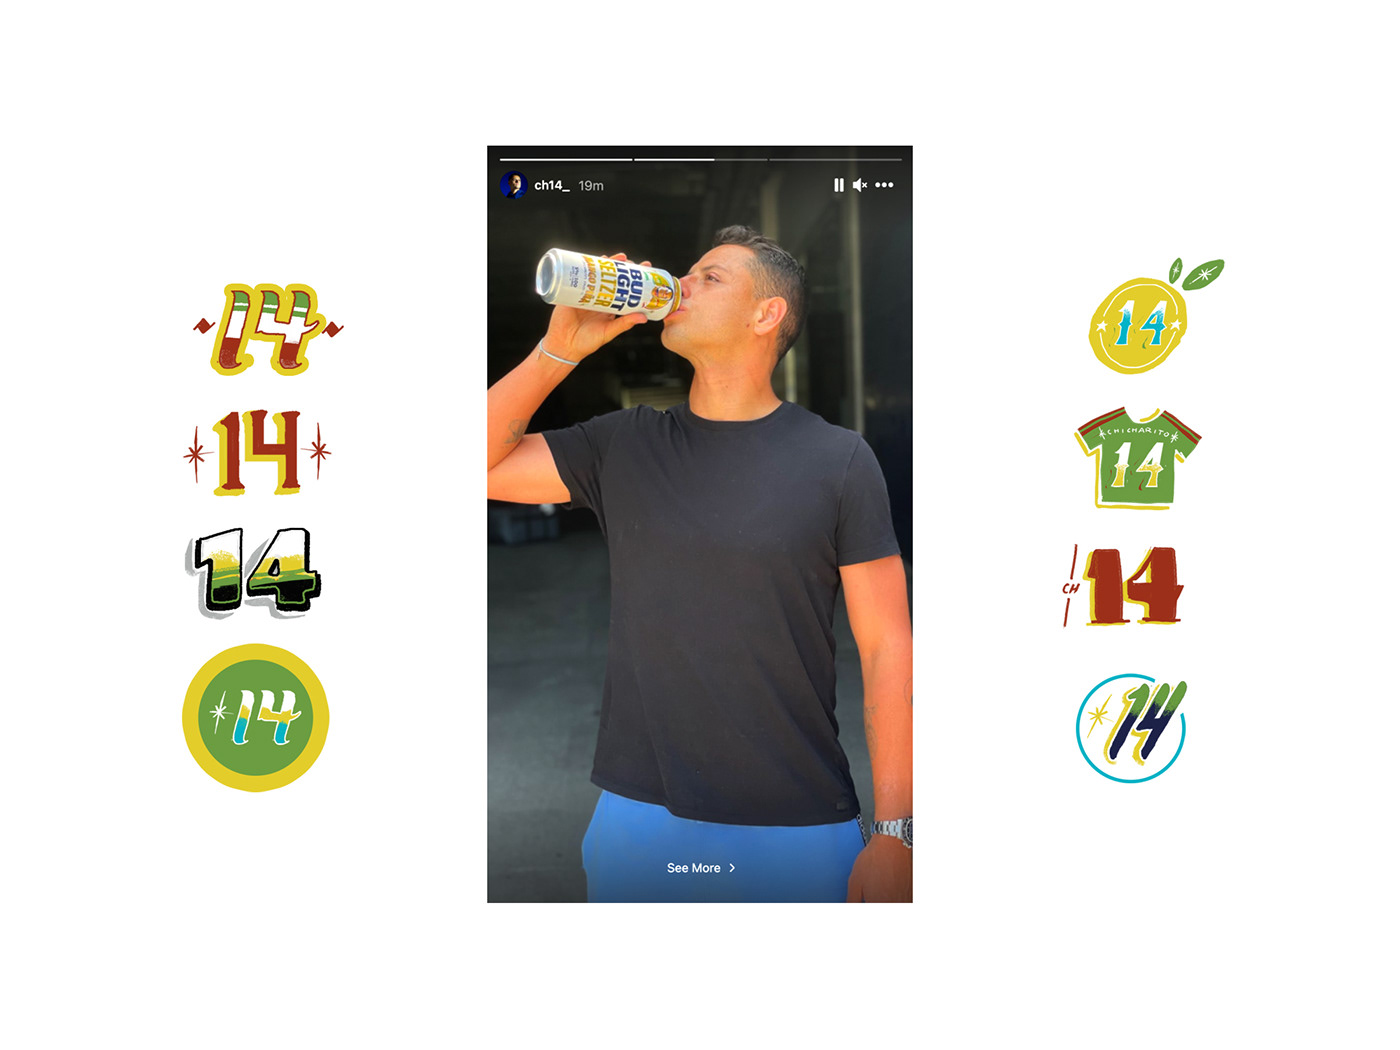 Packaging product design  chicharito Futbol soccer Sports Design Can Design drink beer beer design